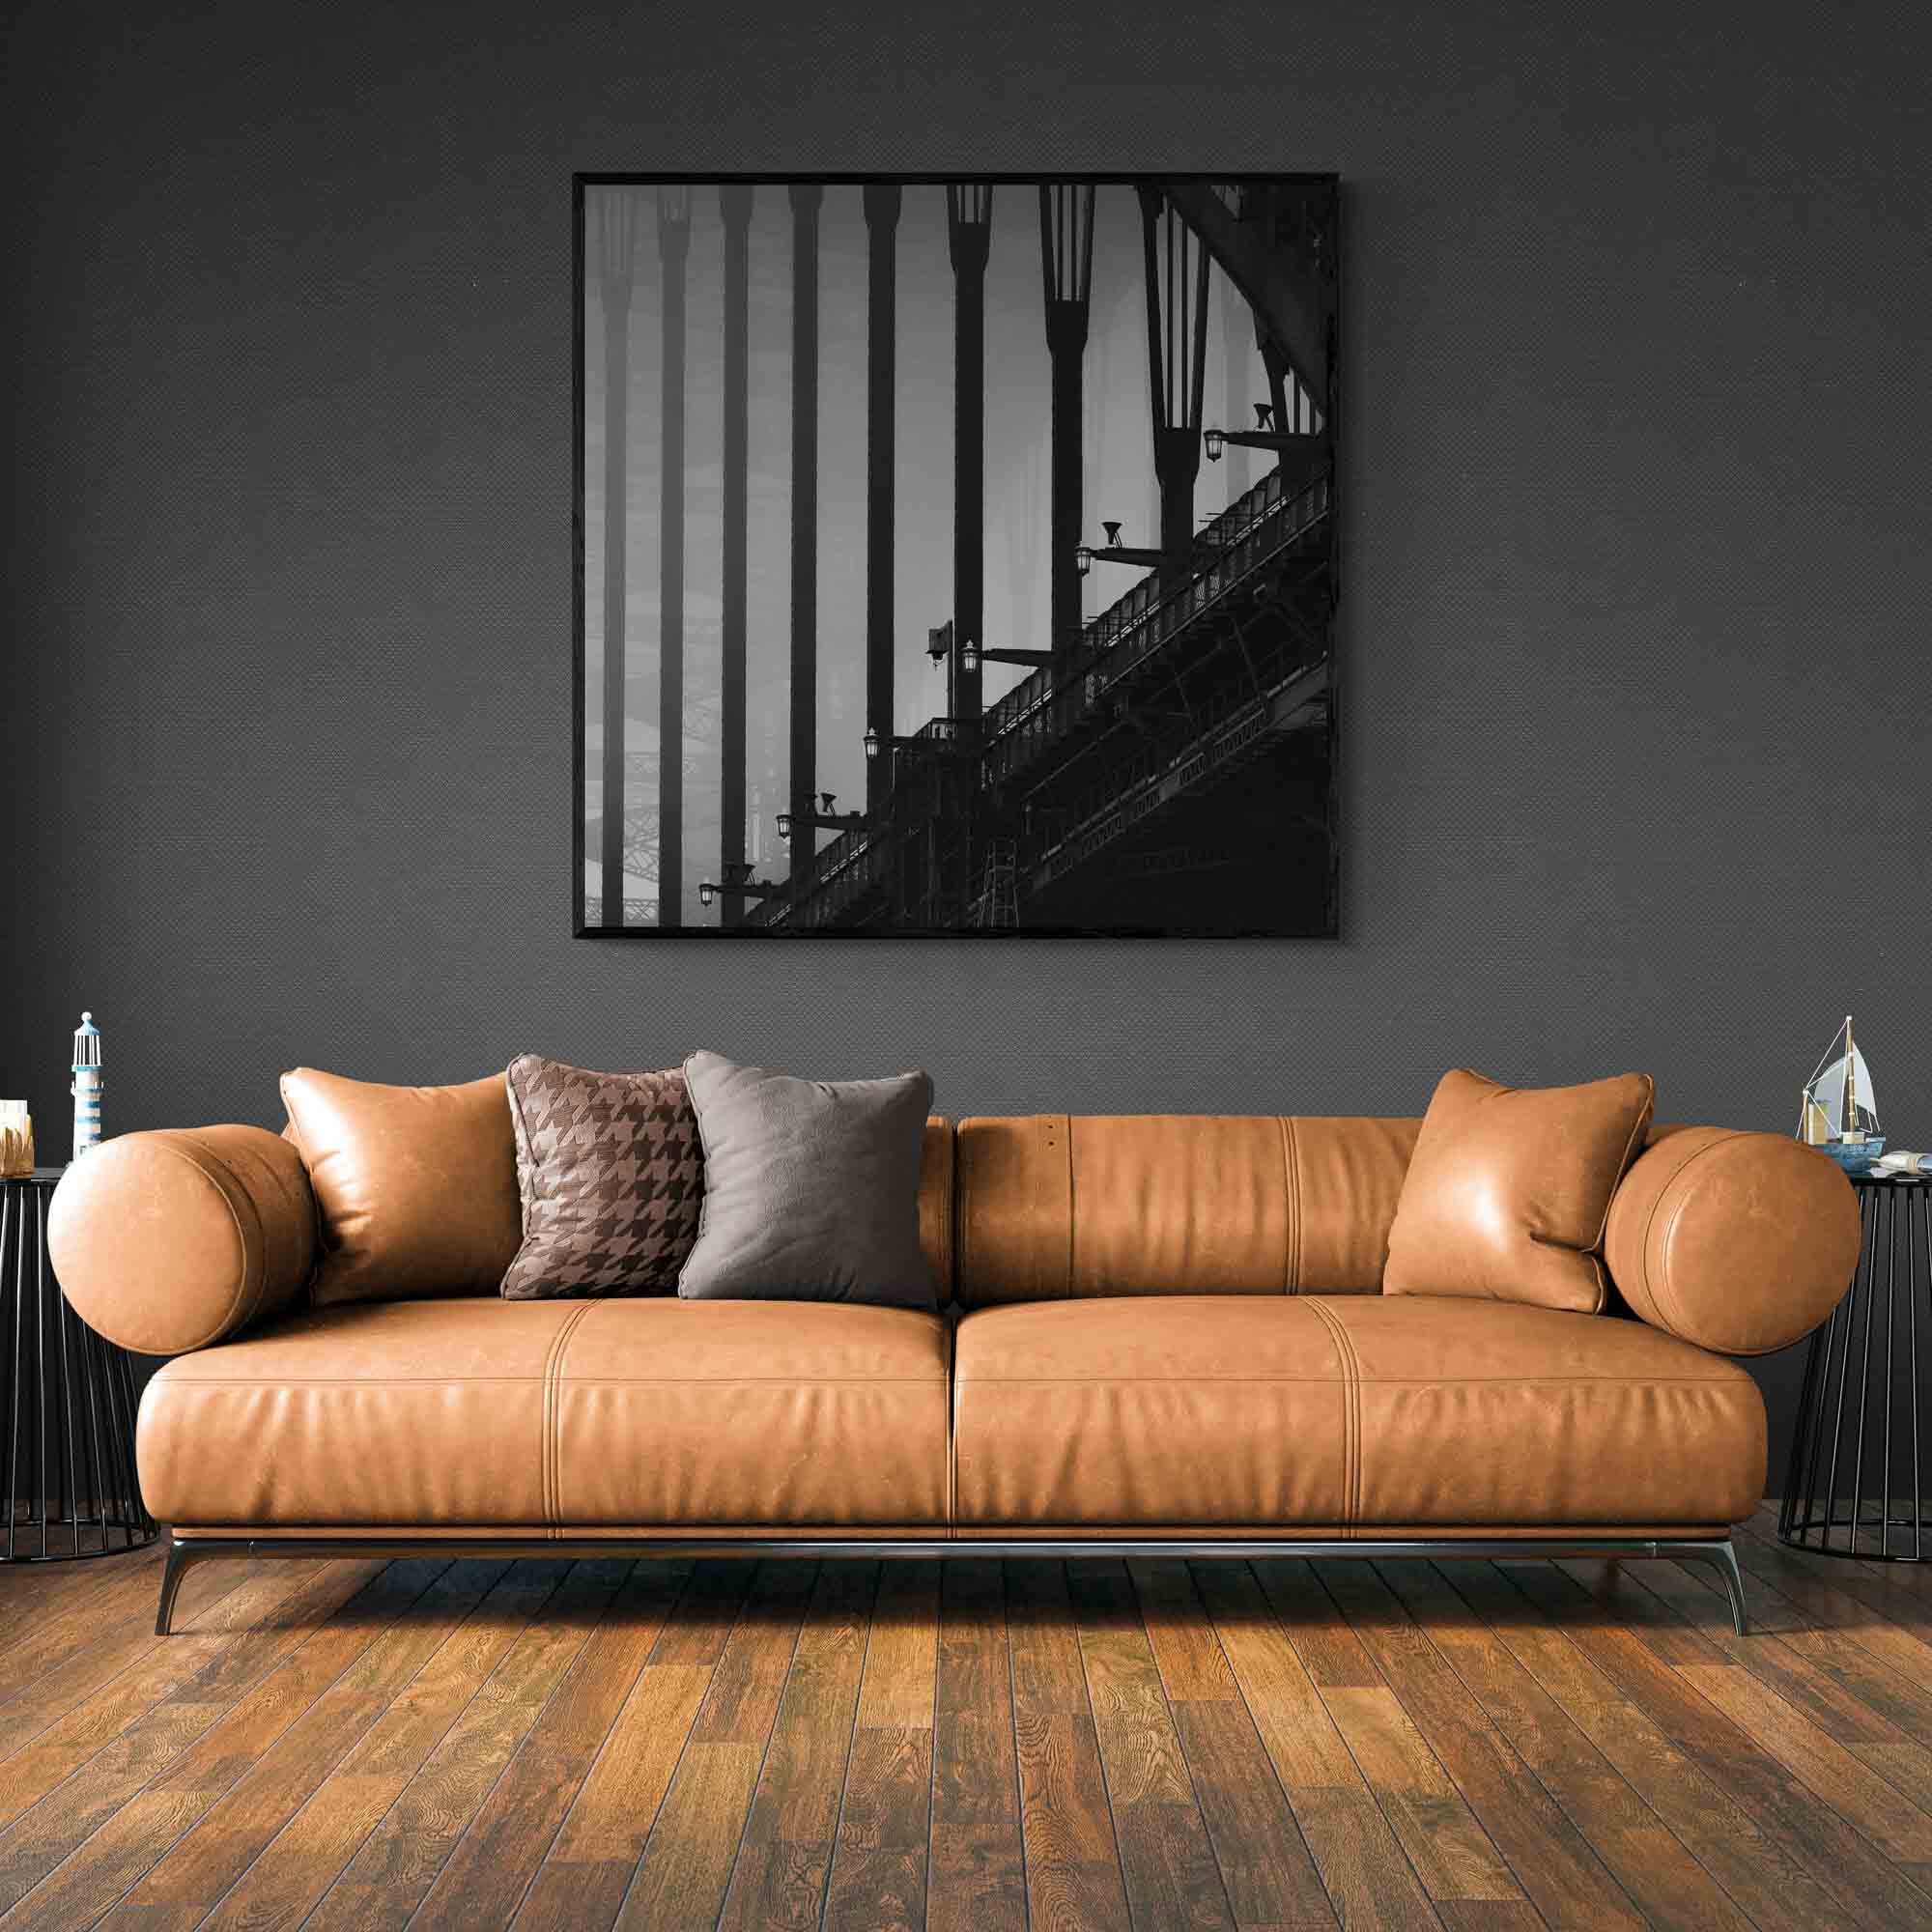 Home Decor Wall Art: Living Room Collection